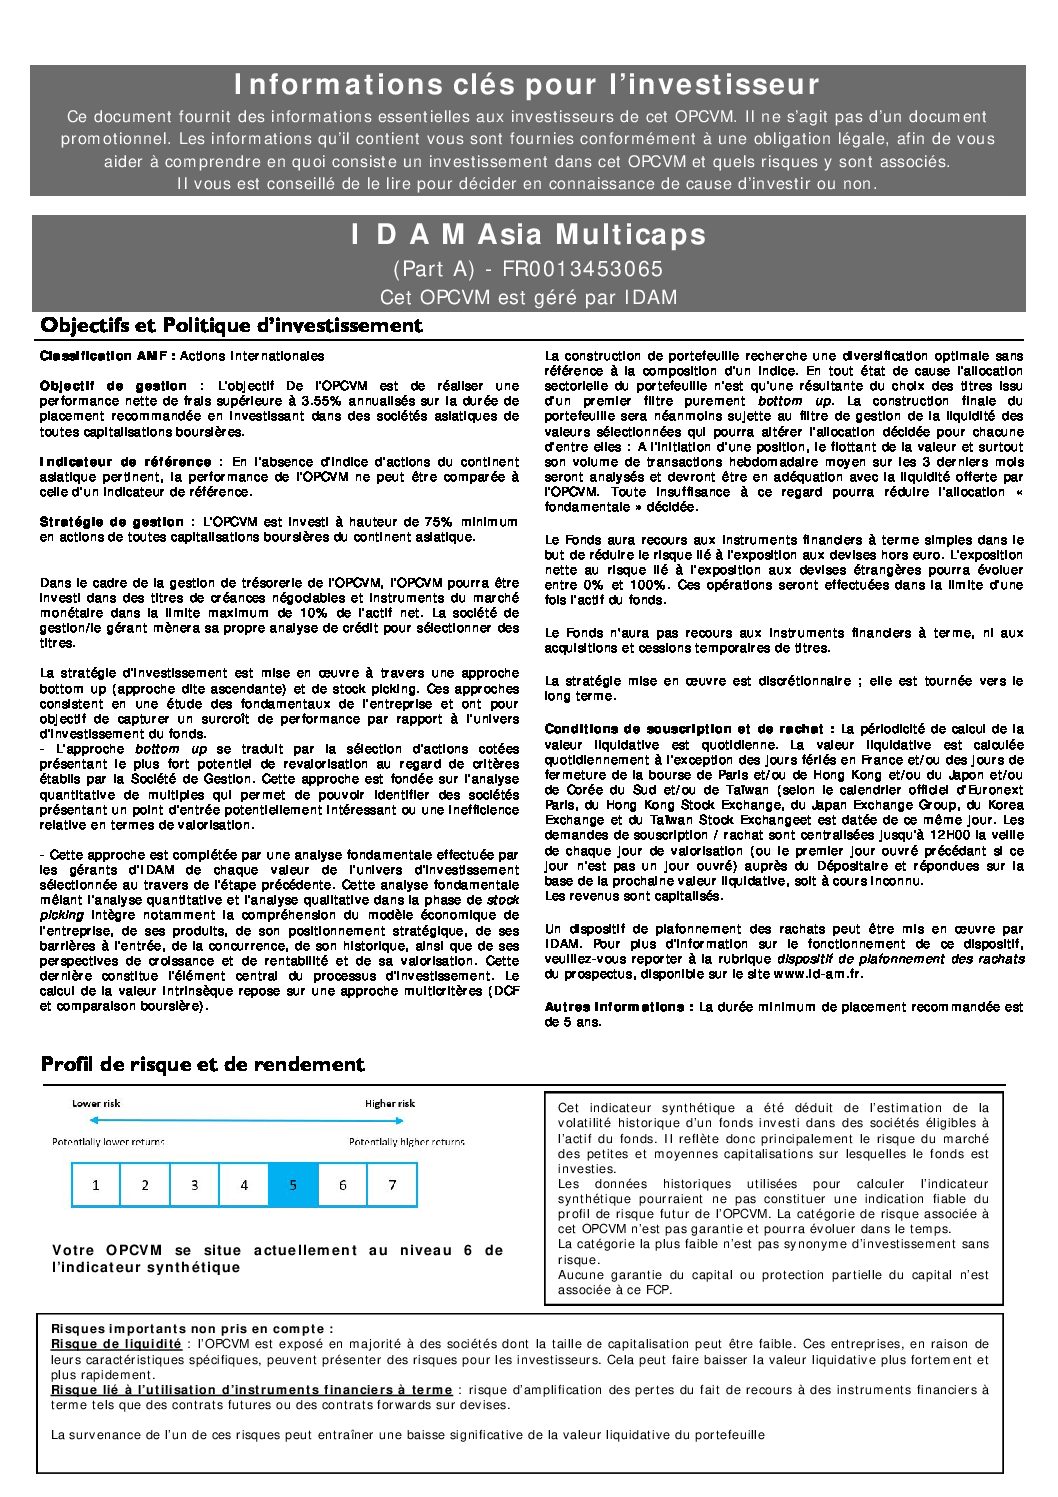 220218-DICI-Part-A-IDAM-ASIA-MULTICAPS-pdf